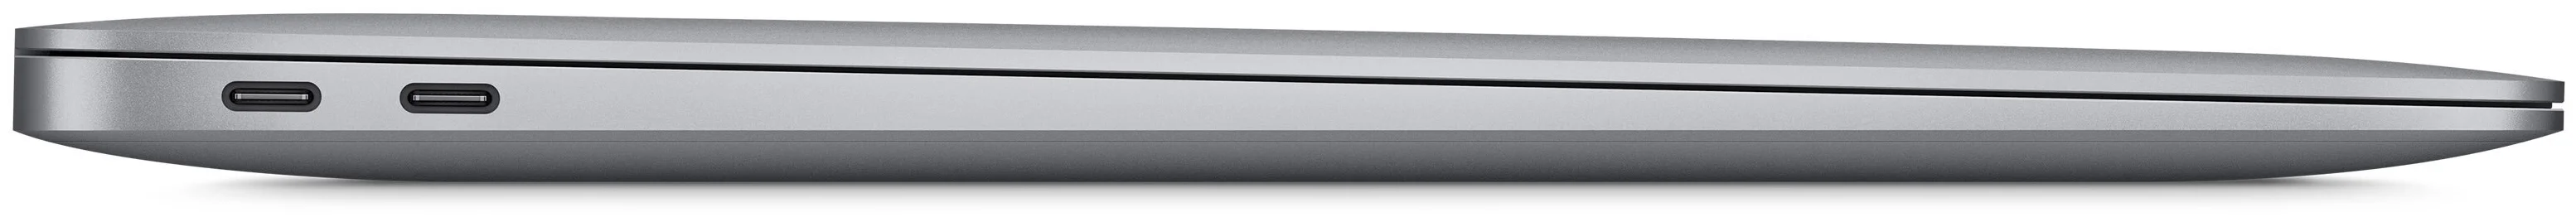 13.3" Apple MacBook Air 13 Early 2020 - разъемы: Thunderbolt 3 x 2, микрофон/наушники Combo